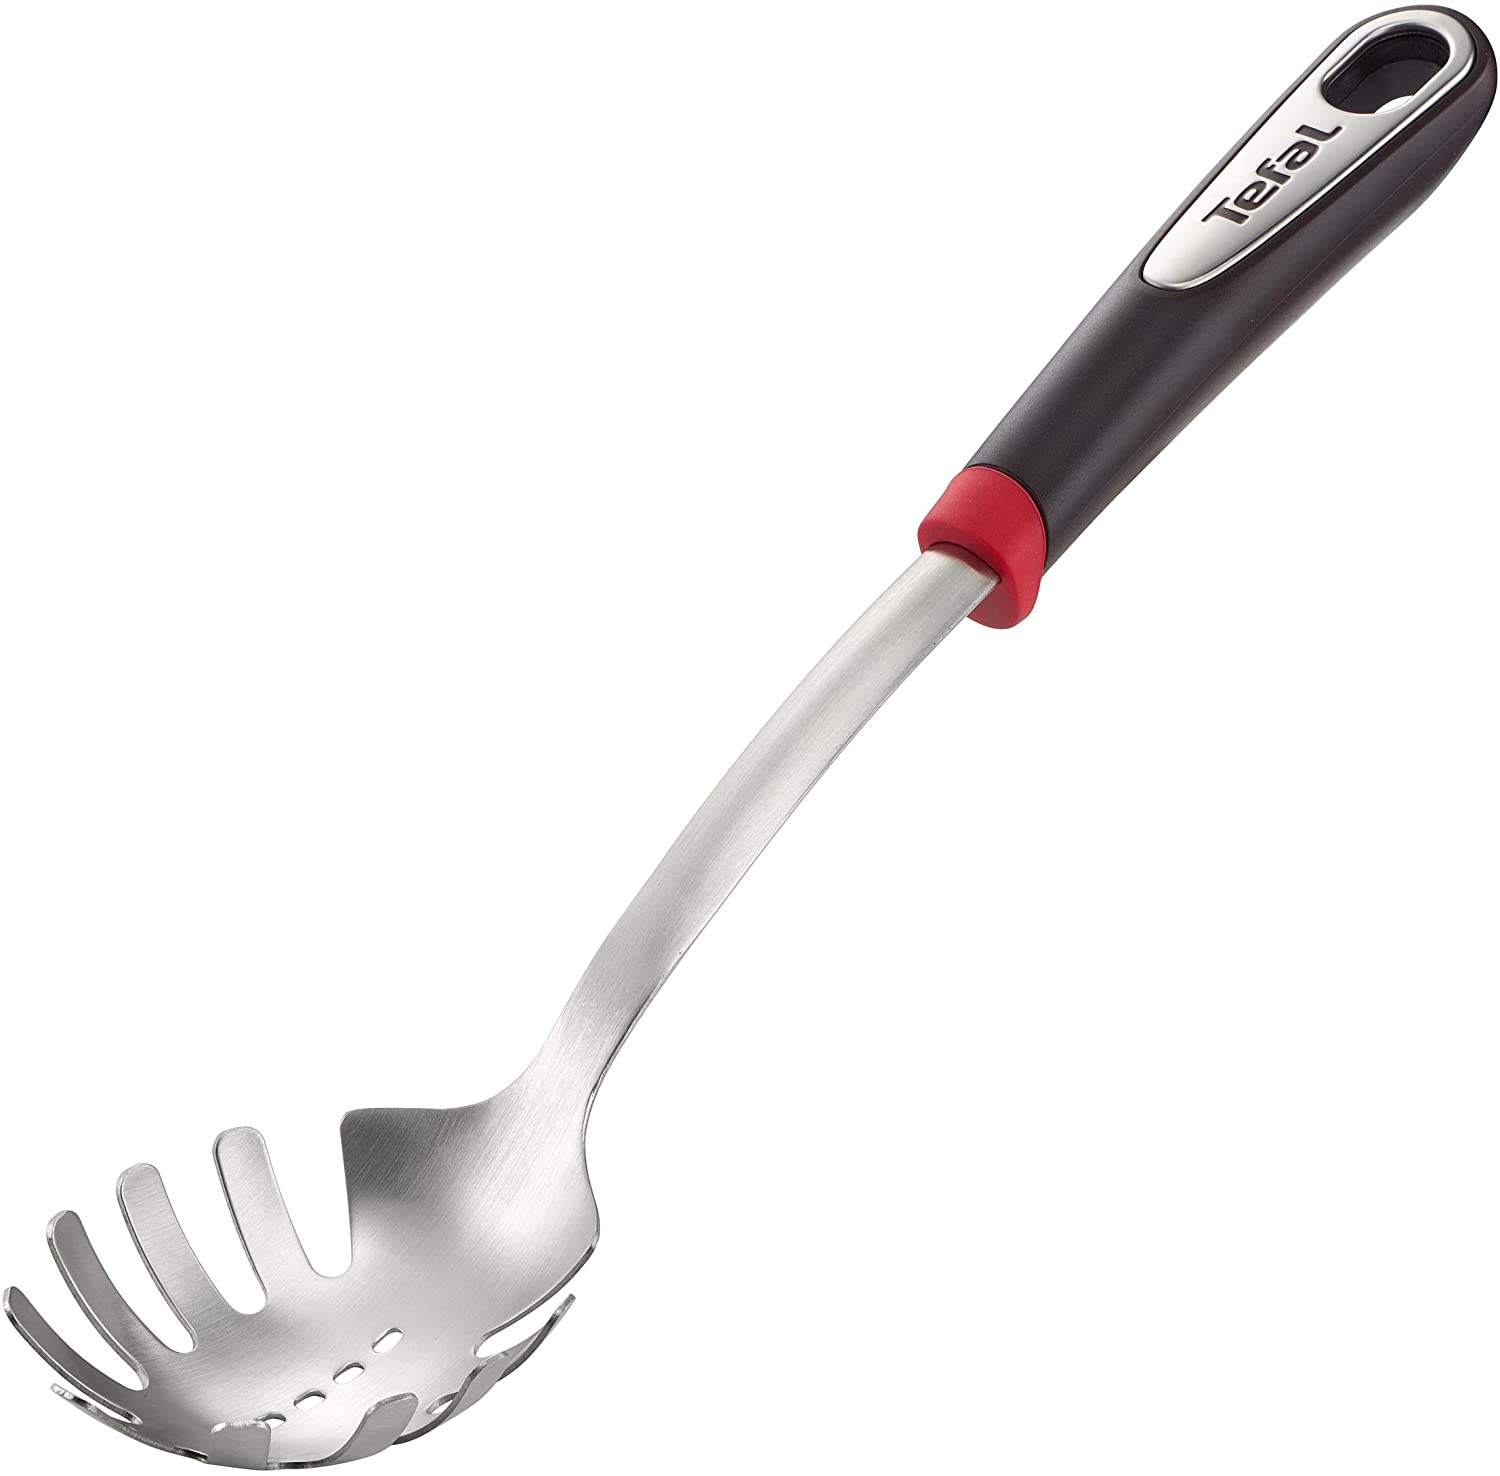 Tefal k1180814 Ingenio stainless steel spoon pasta machine stainless steel silver 38.0 x 9.1 x 5.09 cm